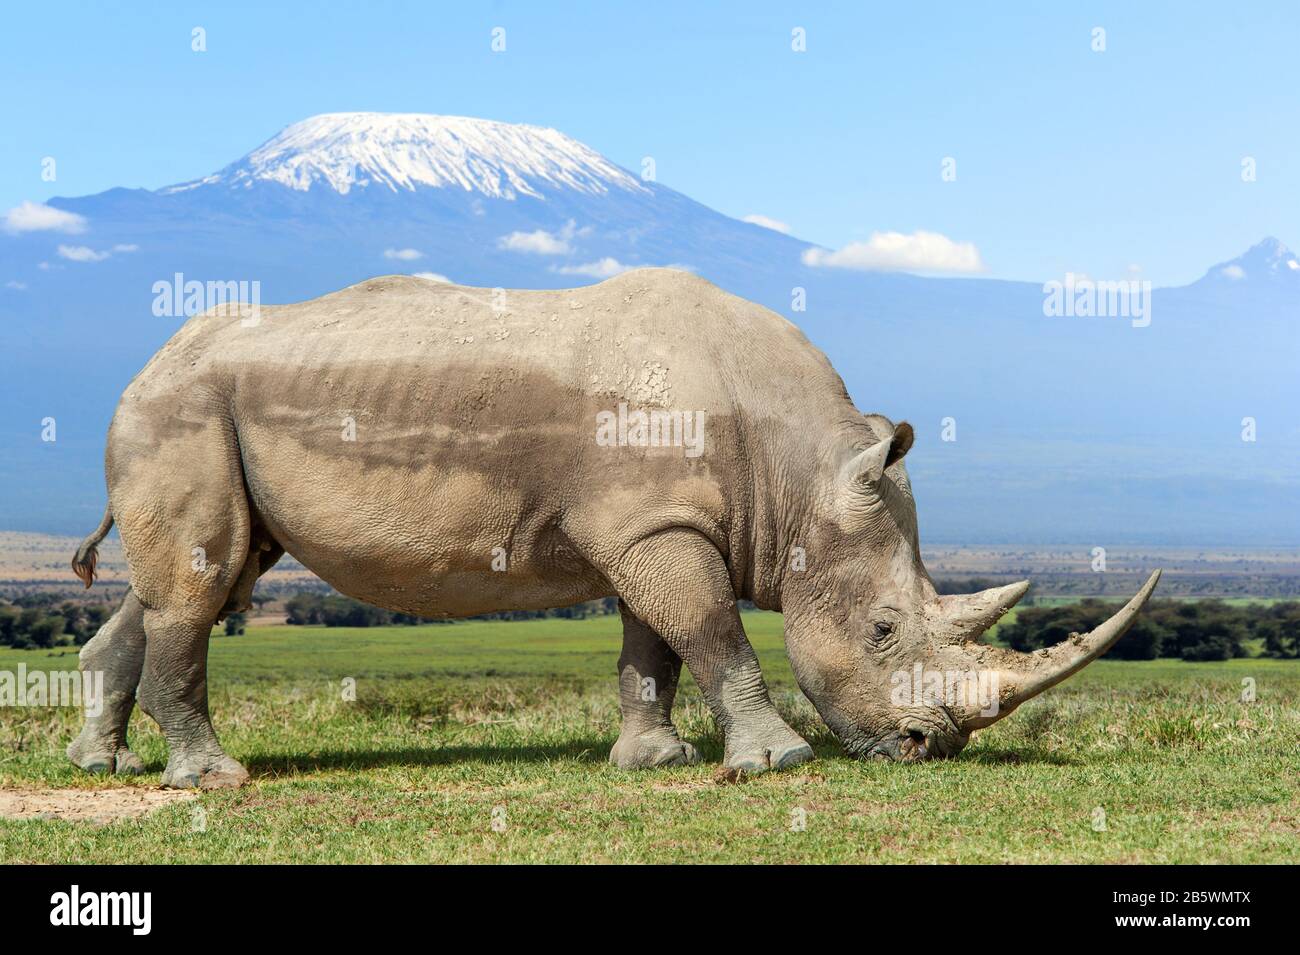 Rhino in front of Kilimanjaro mountain, Amboseli National Park of Kenya, Africa Stock Photo